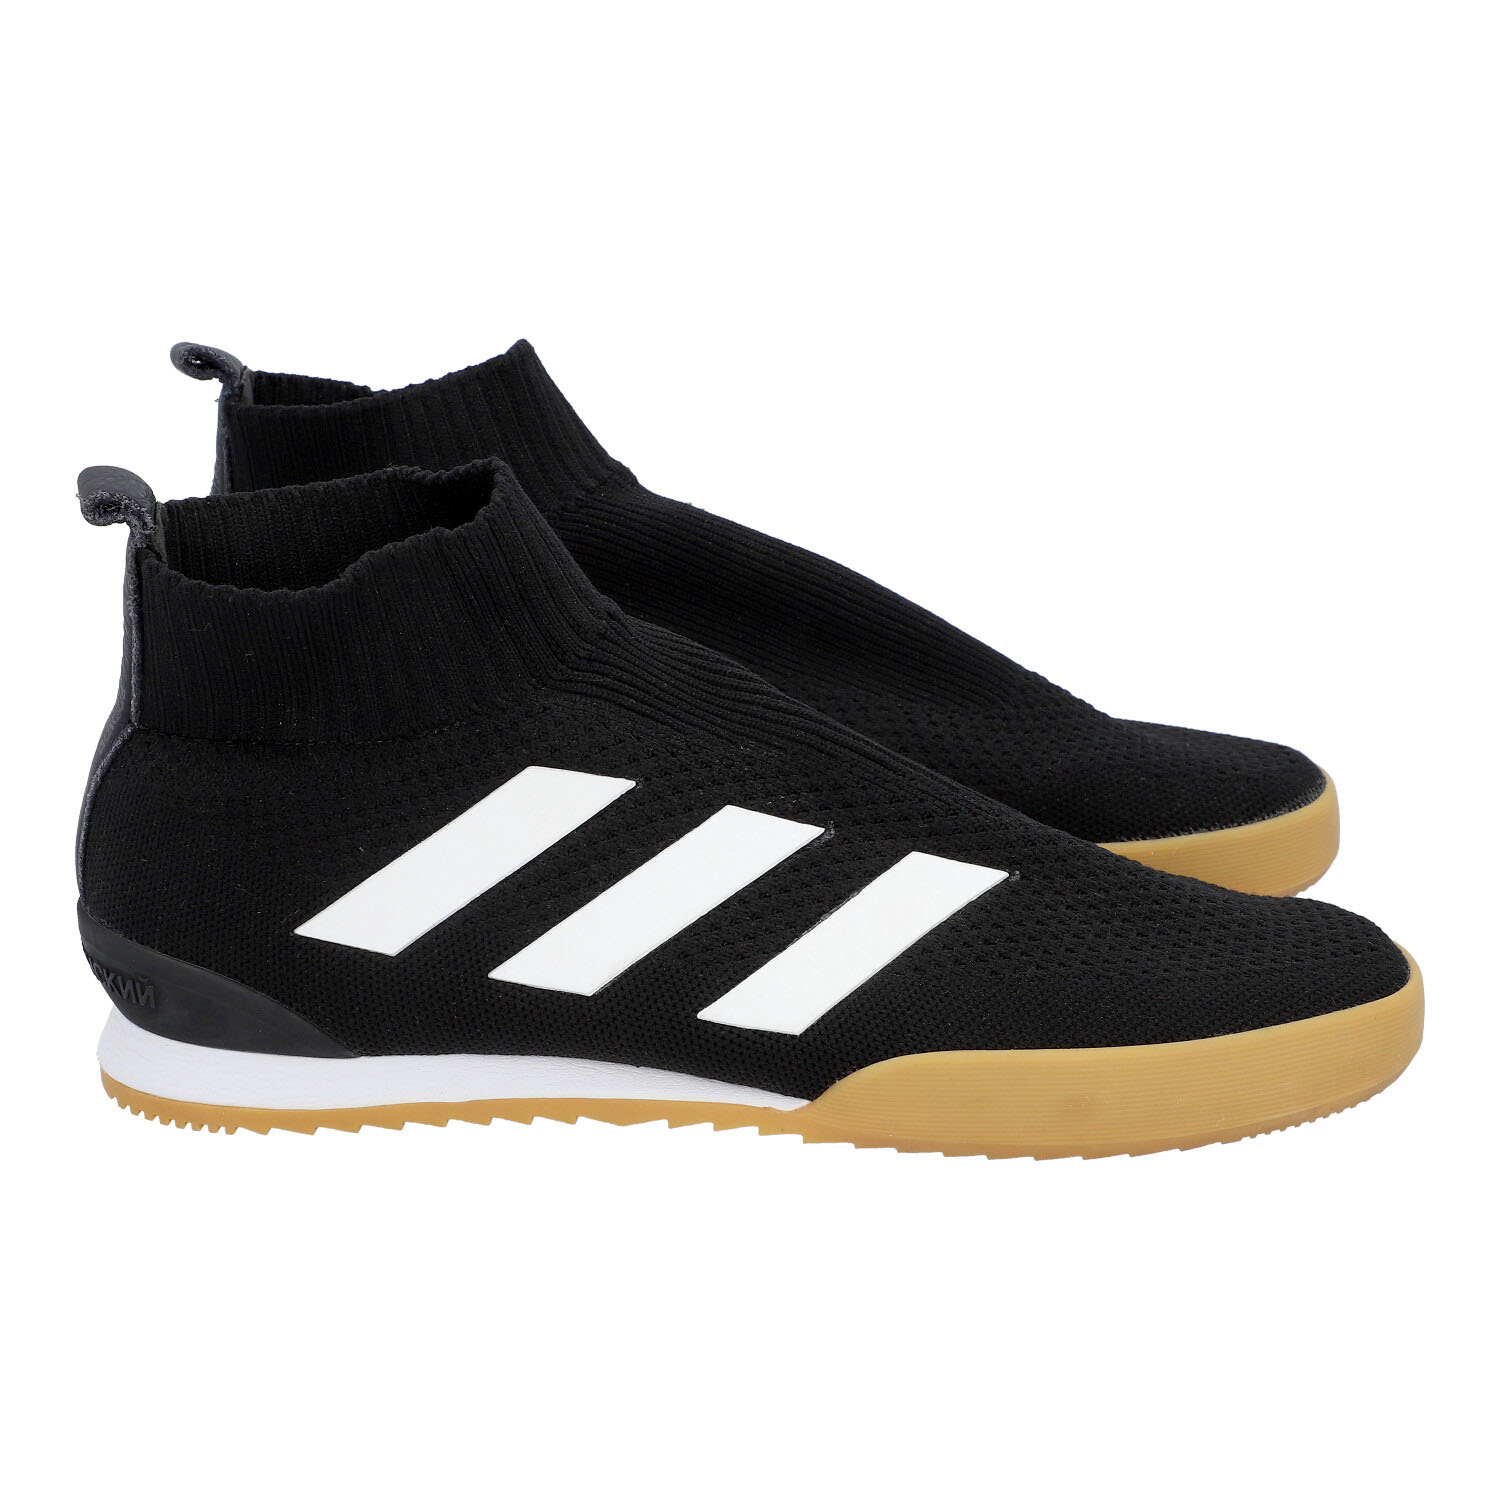 ADIDAS X GOSH RUBCHINSKY Sock-Sneaker, size 41,5. - Image 2 of 4